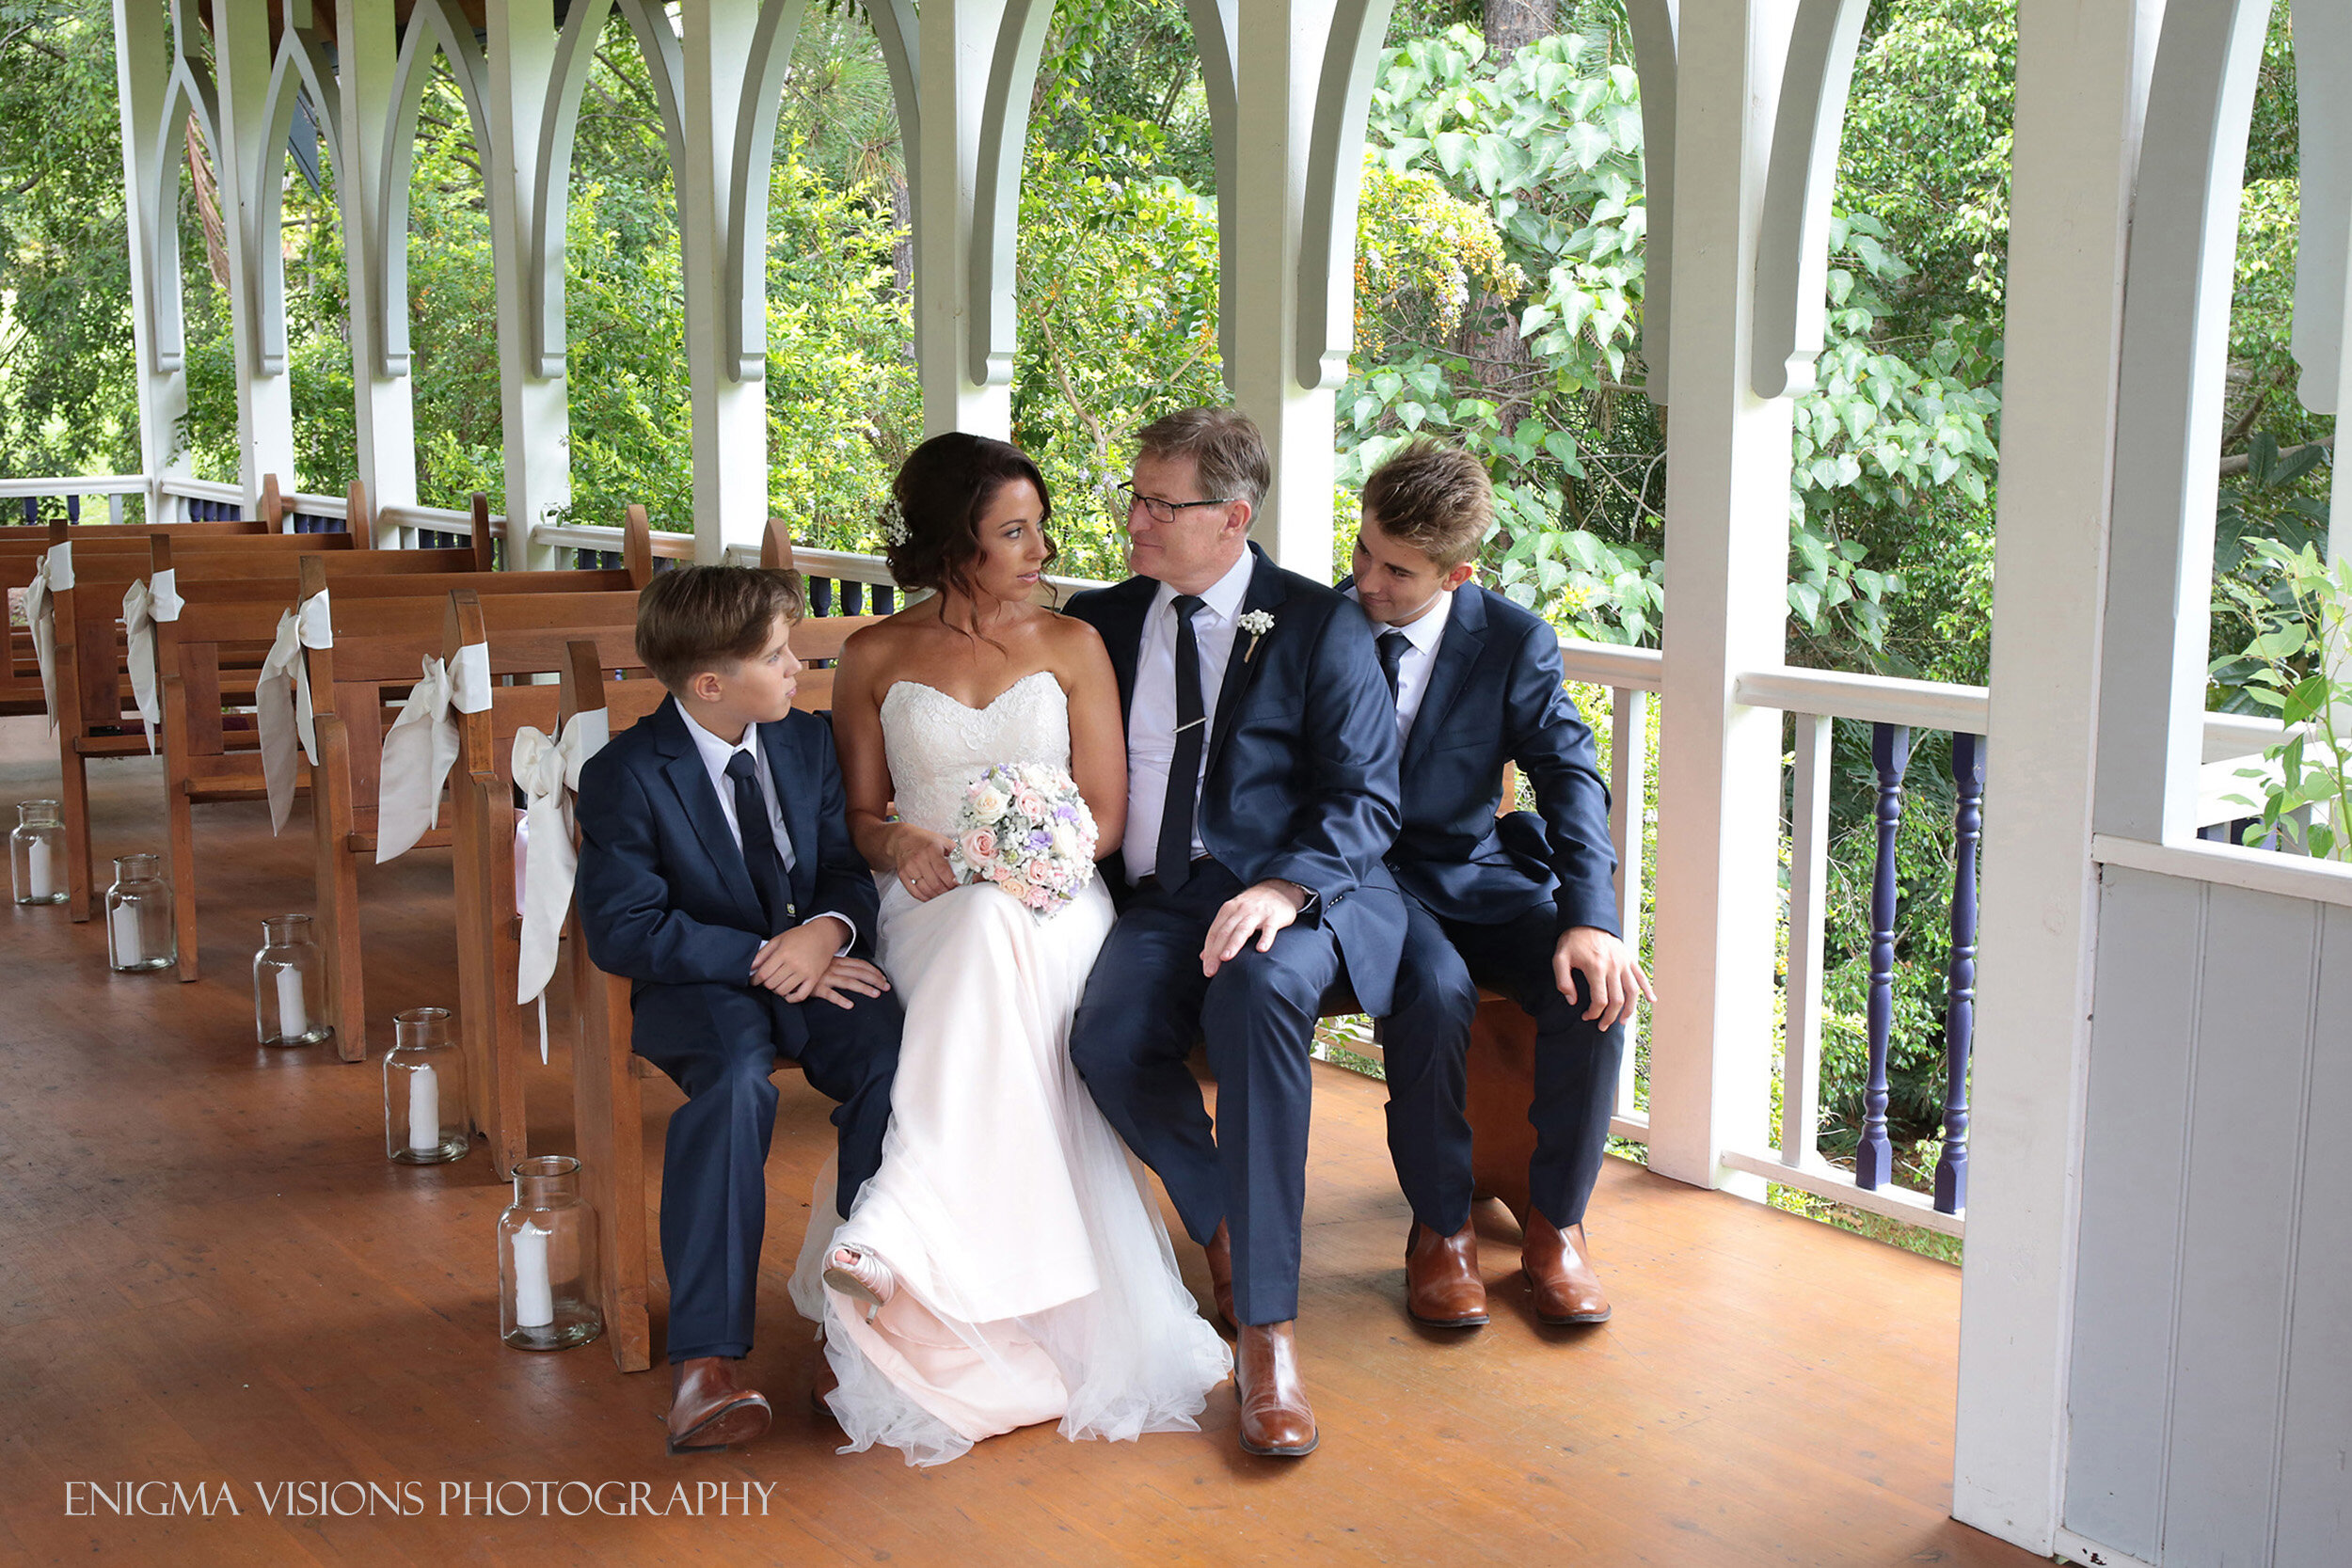 enigma_visions_photography_wedding-Belinda+Howard (33).jpg